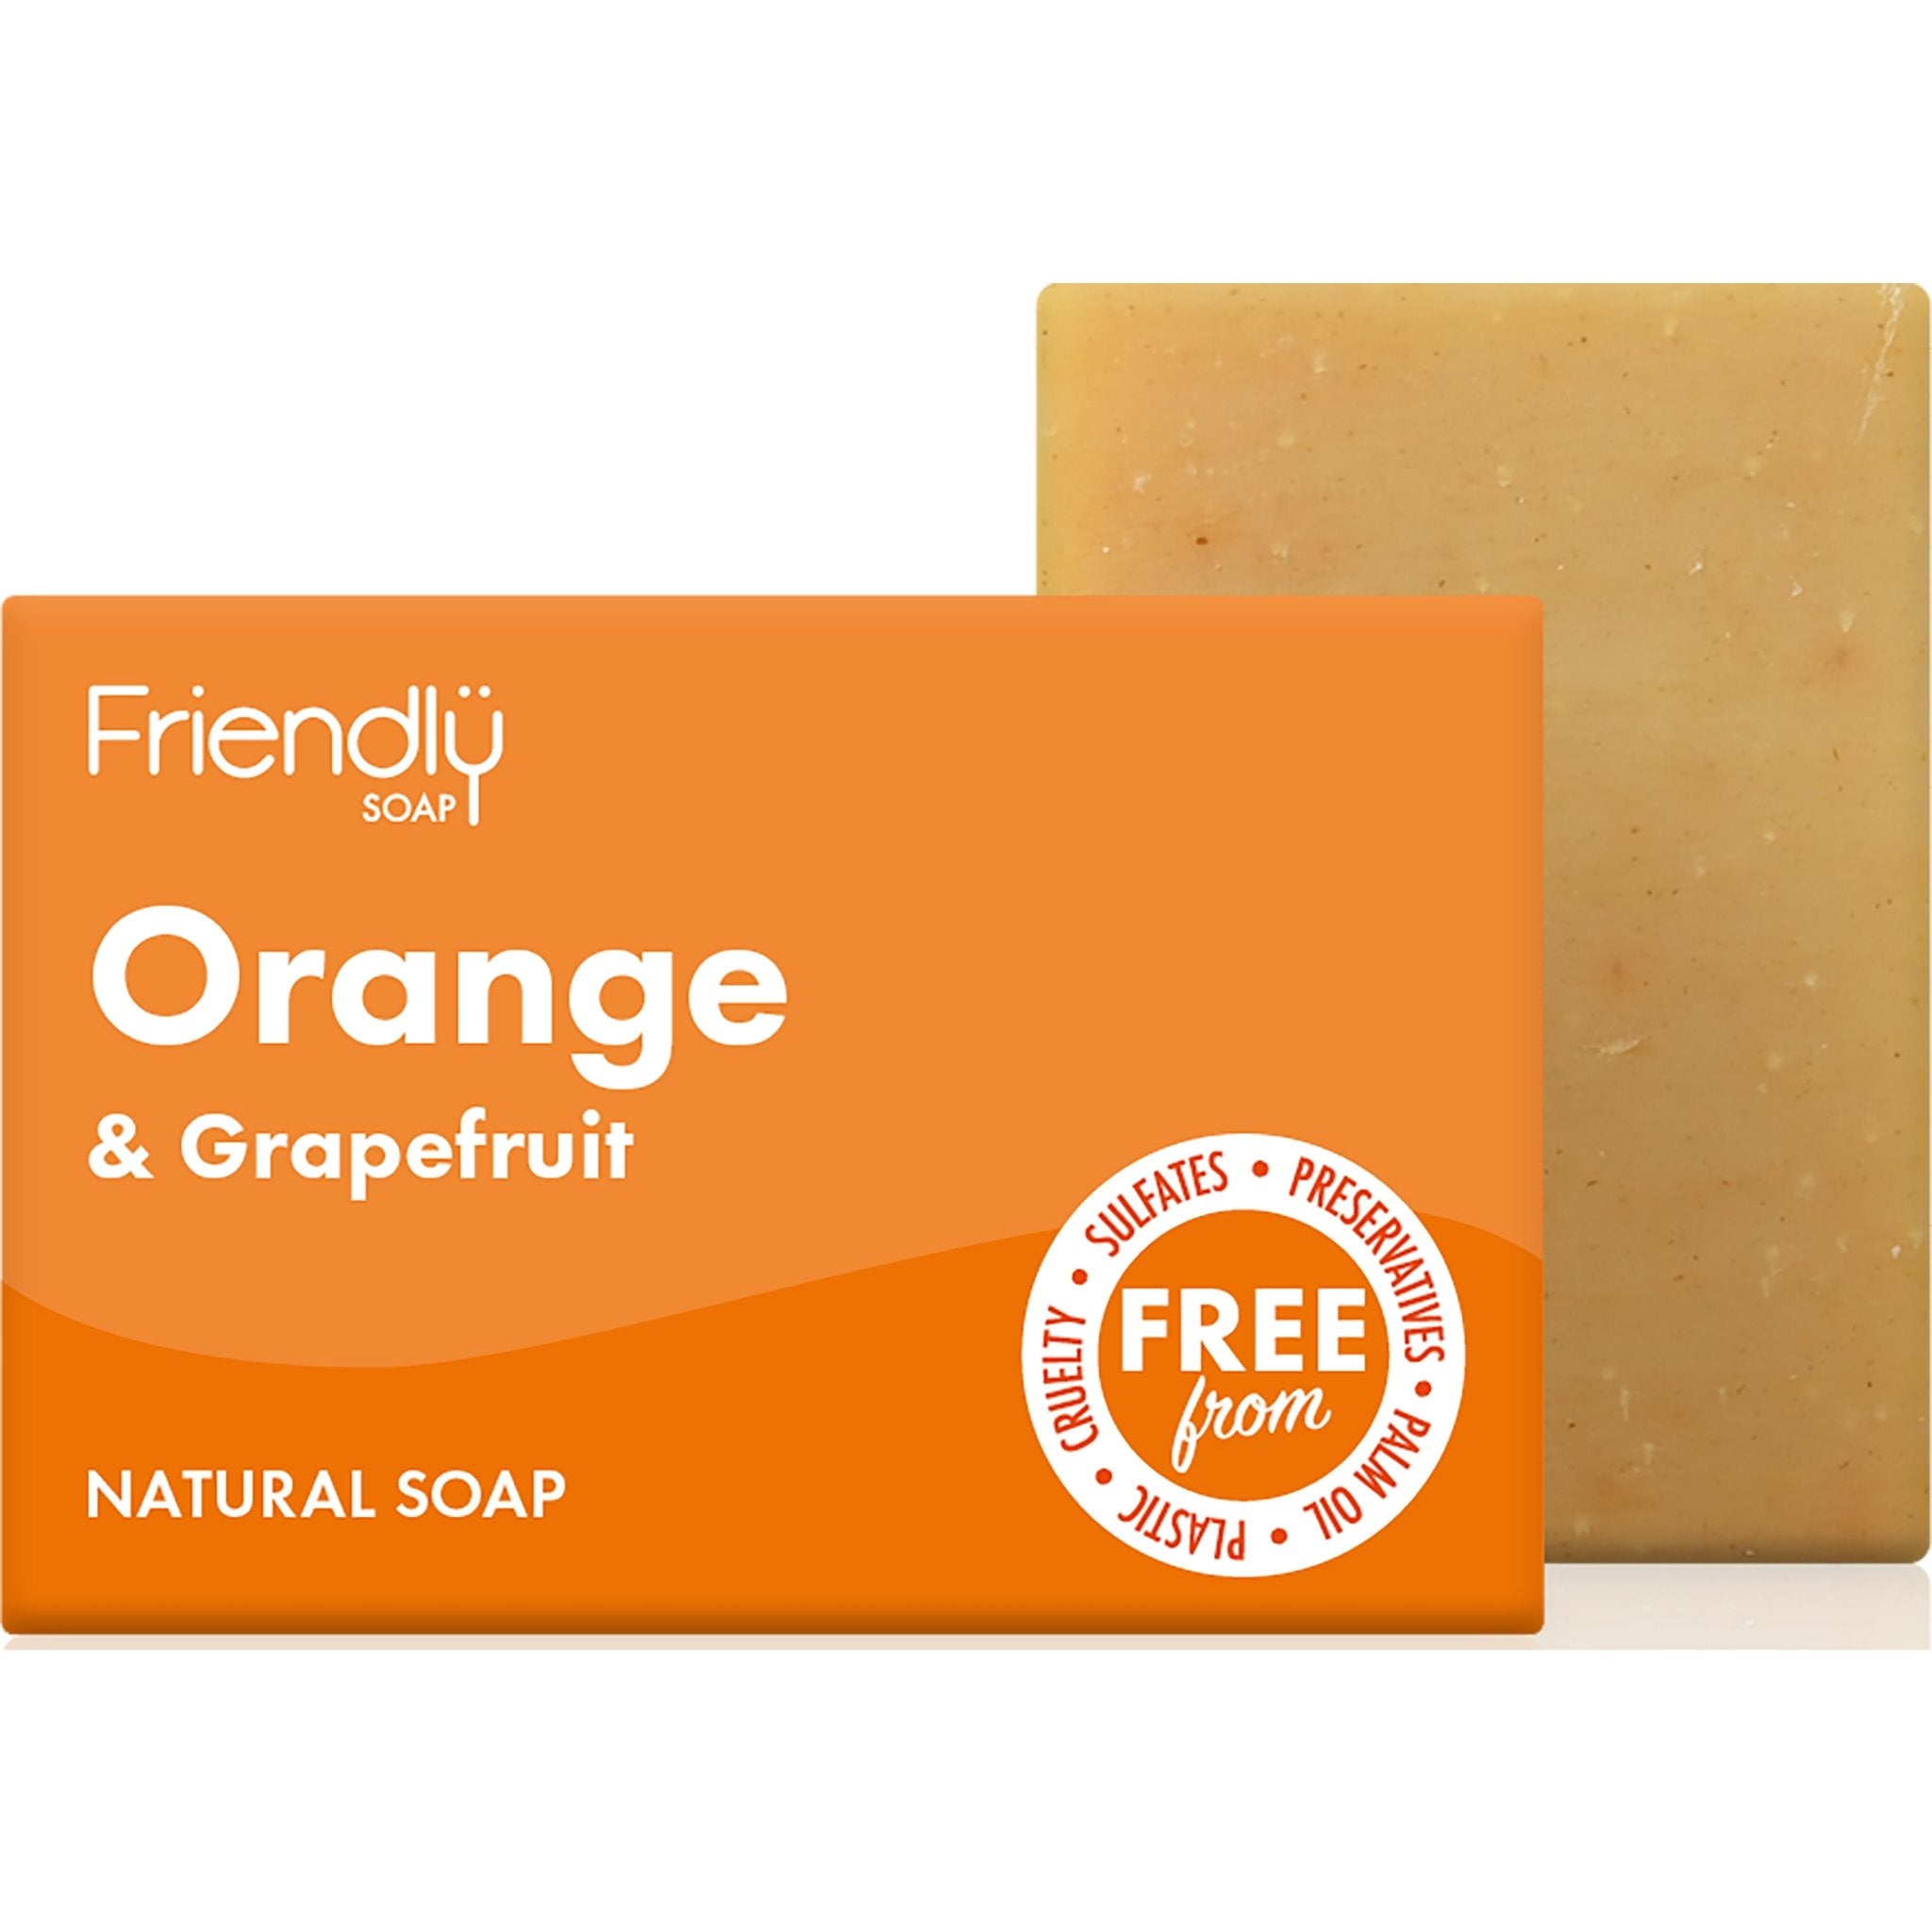 Orange & Grapefruit Soap Bar - mypure.co.uk